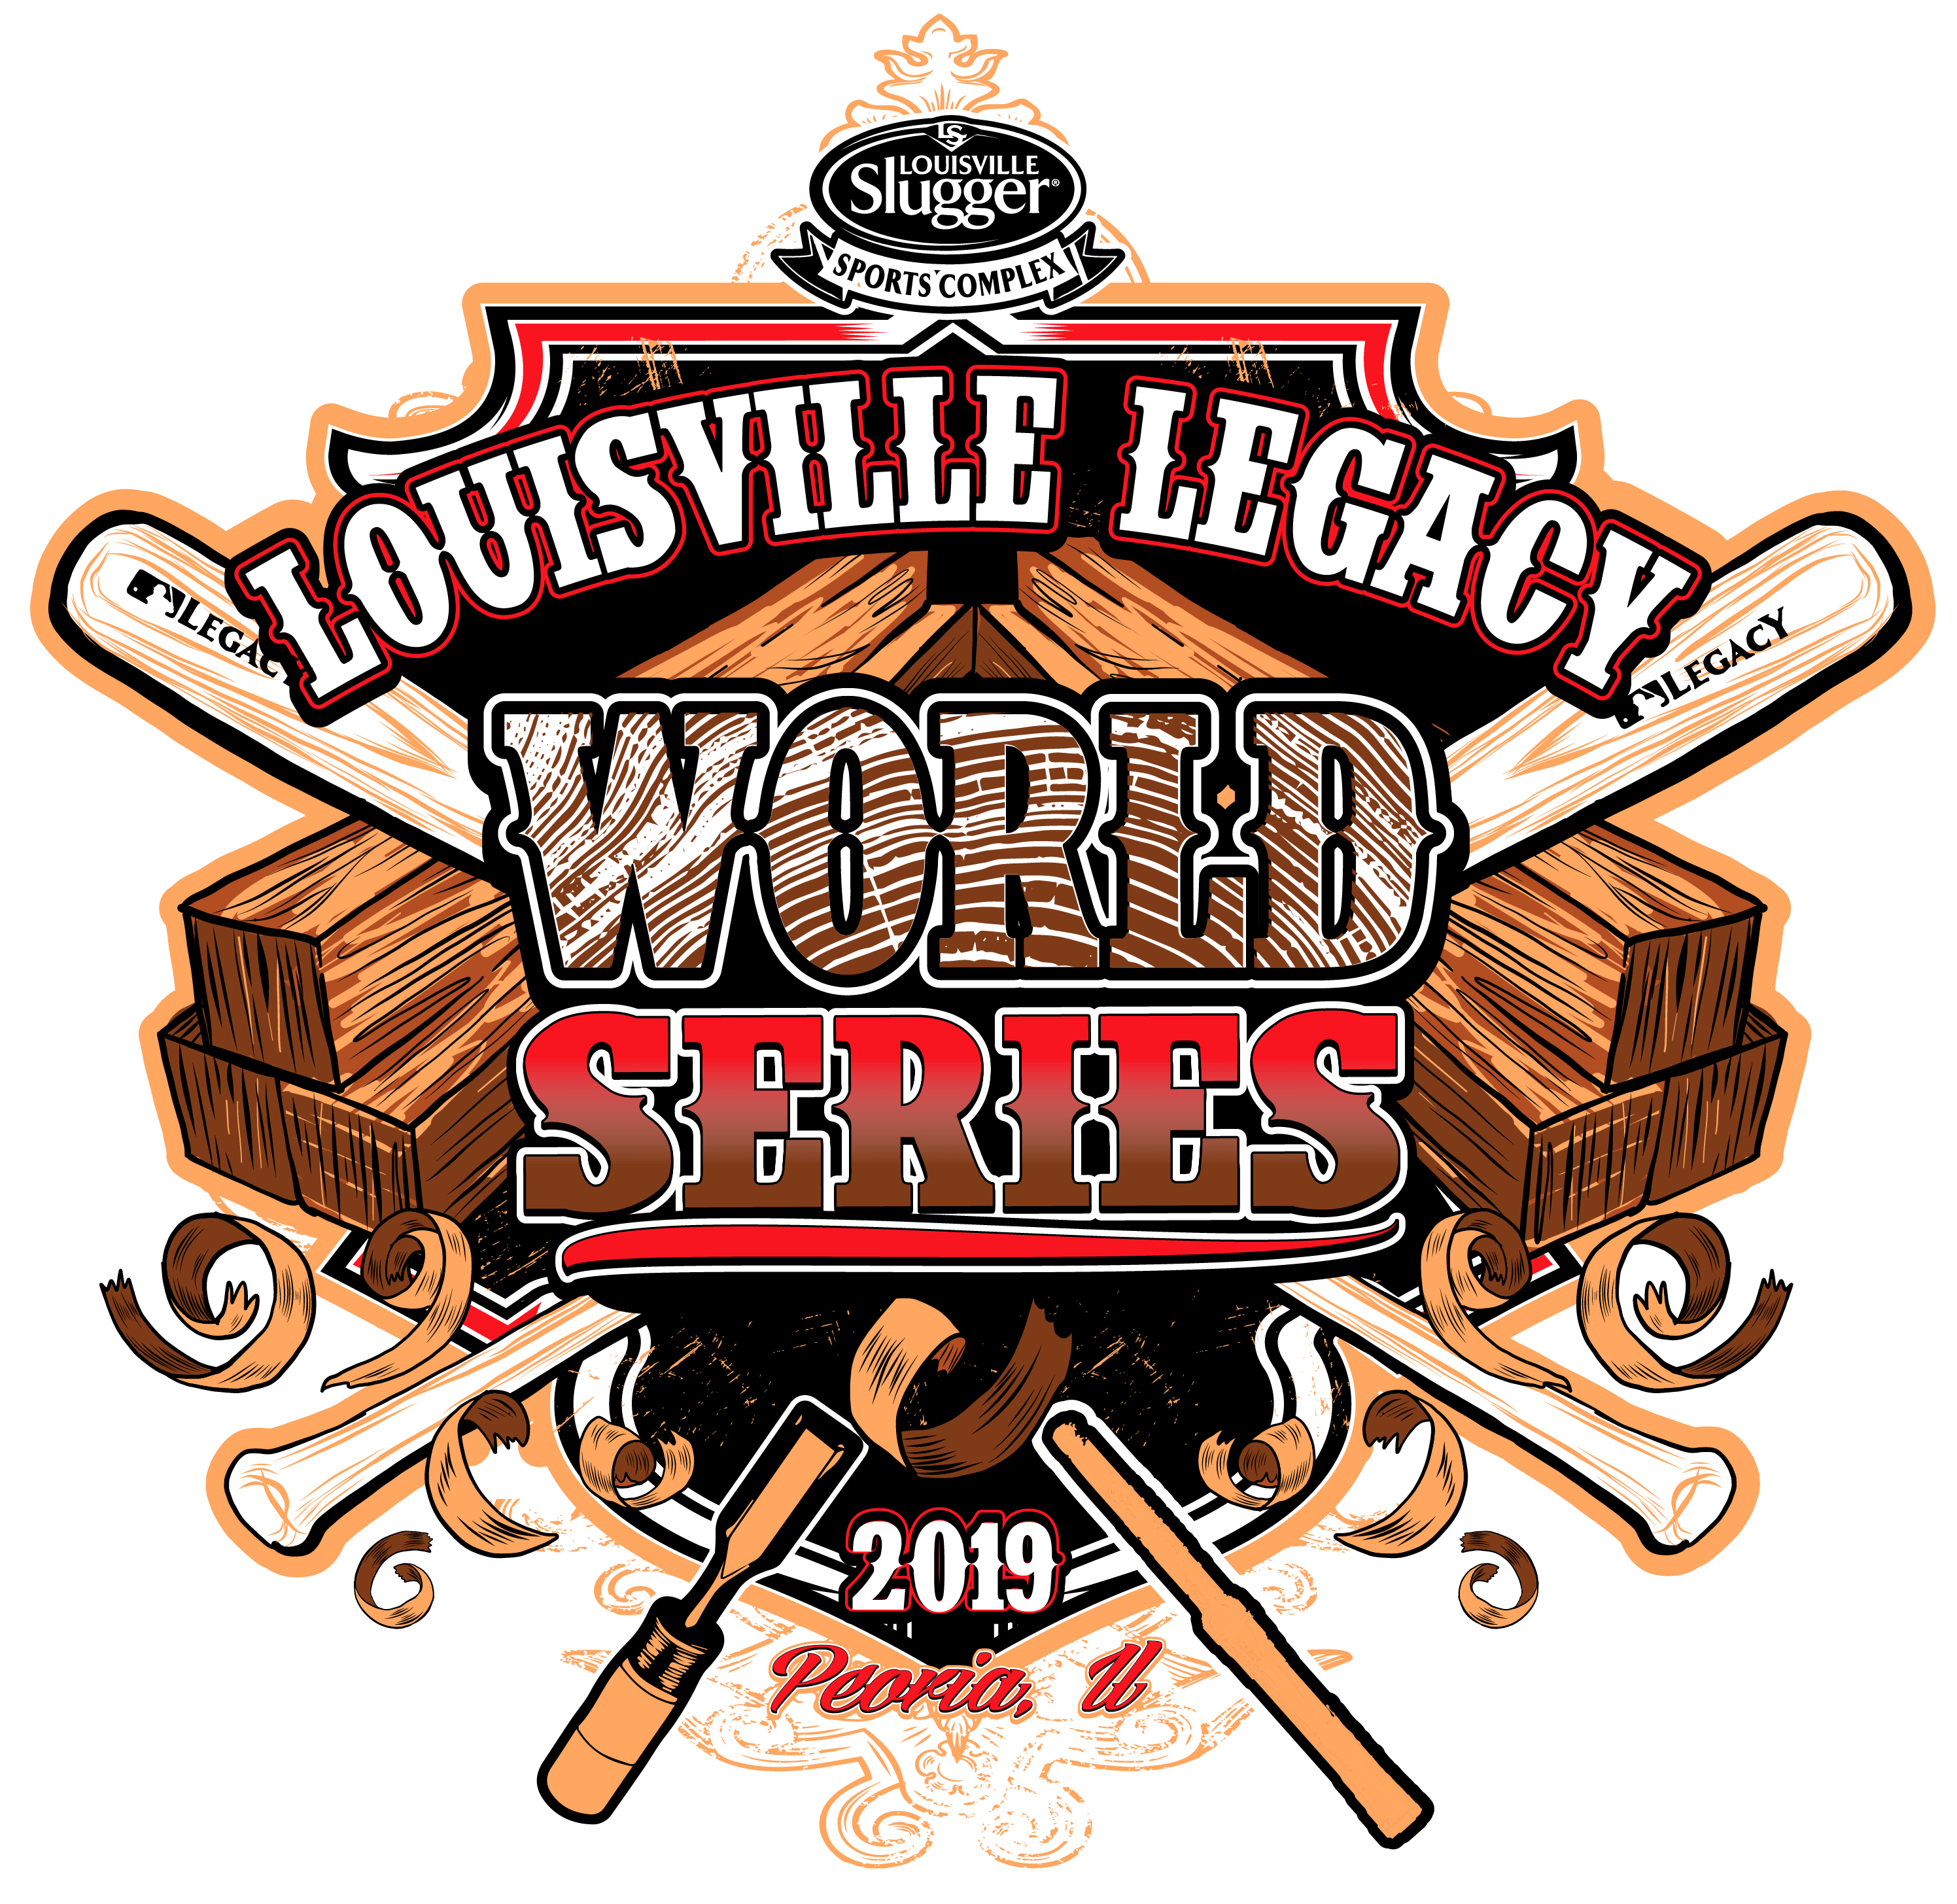 Louisville Softball Logo - Louisville Slugger Sports Complex